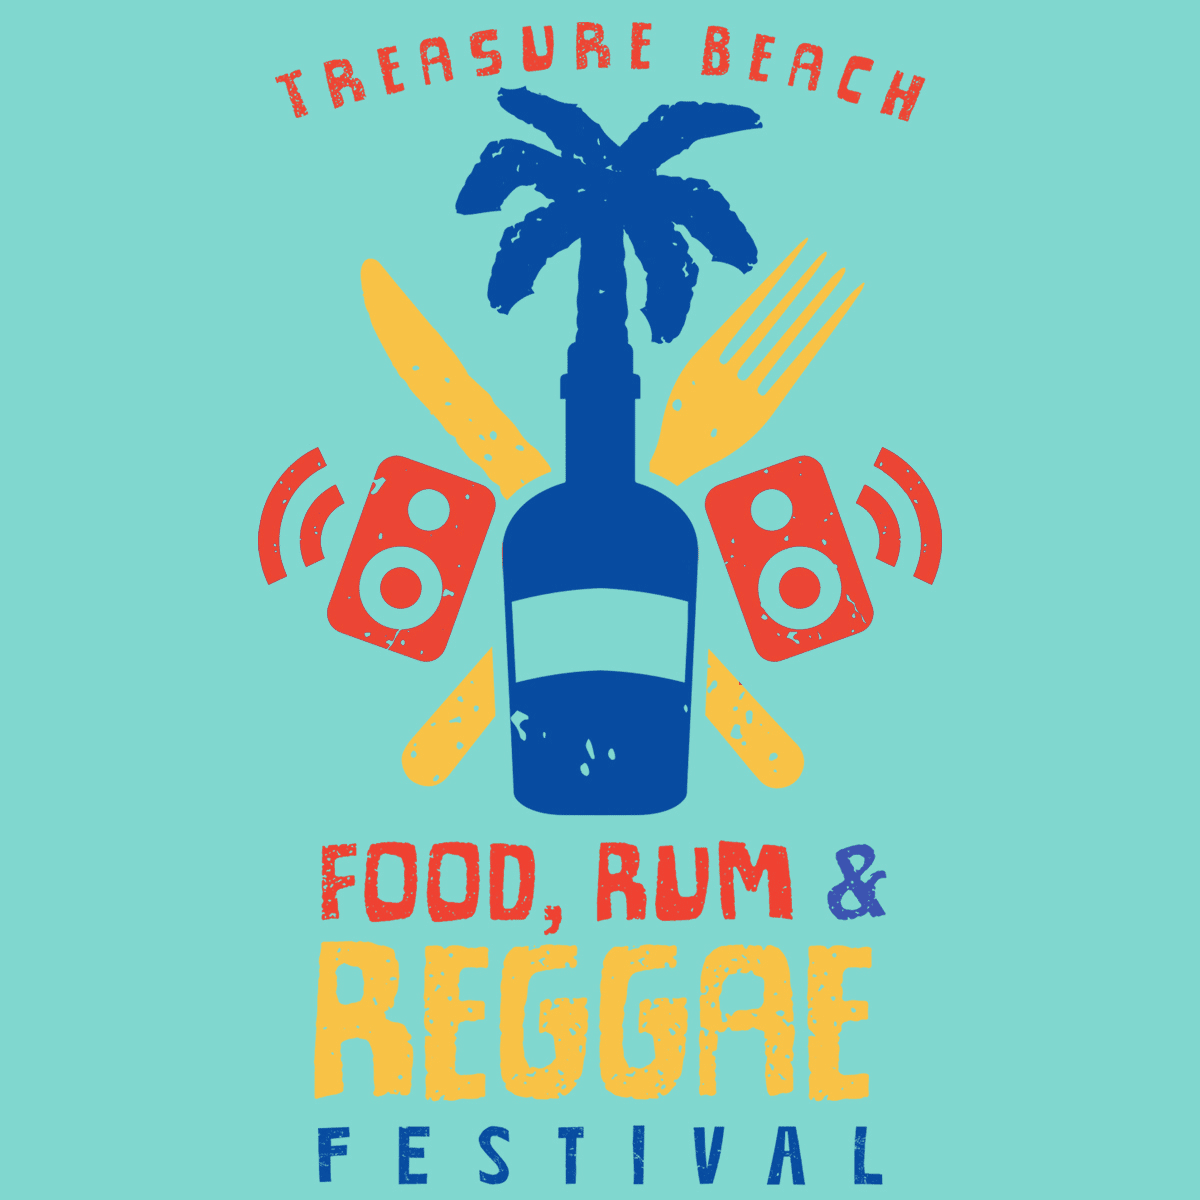 Day 1: Treasure Beach Food, Rum & Reggae Festival